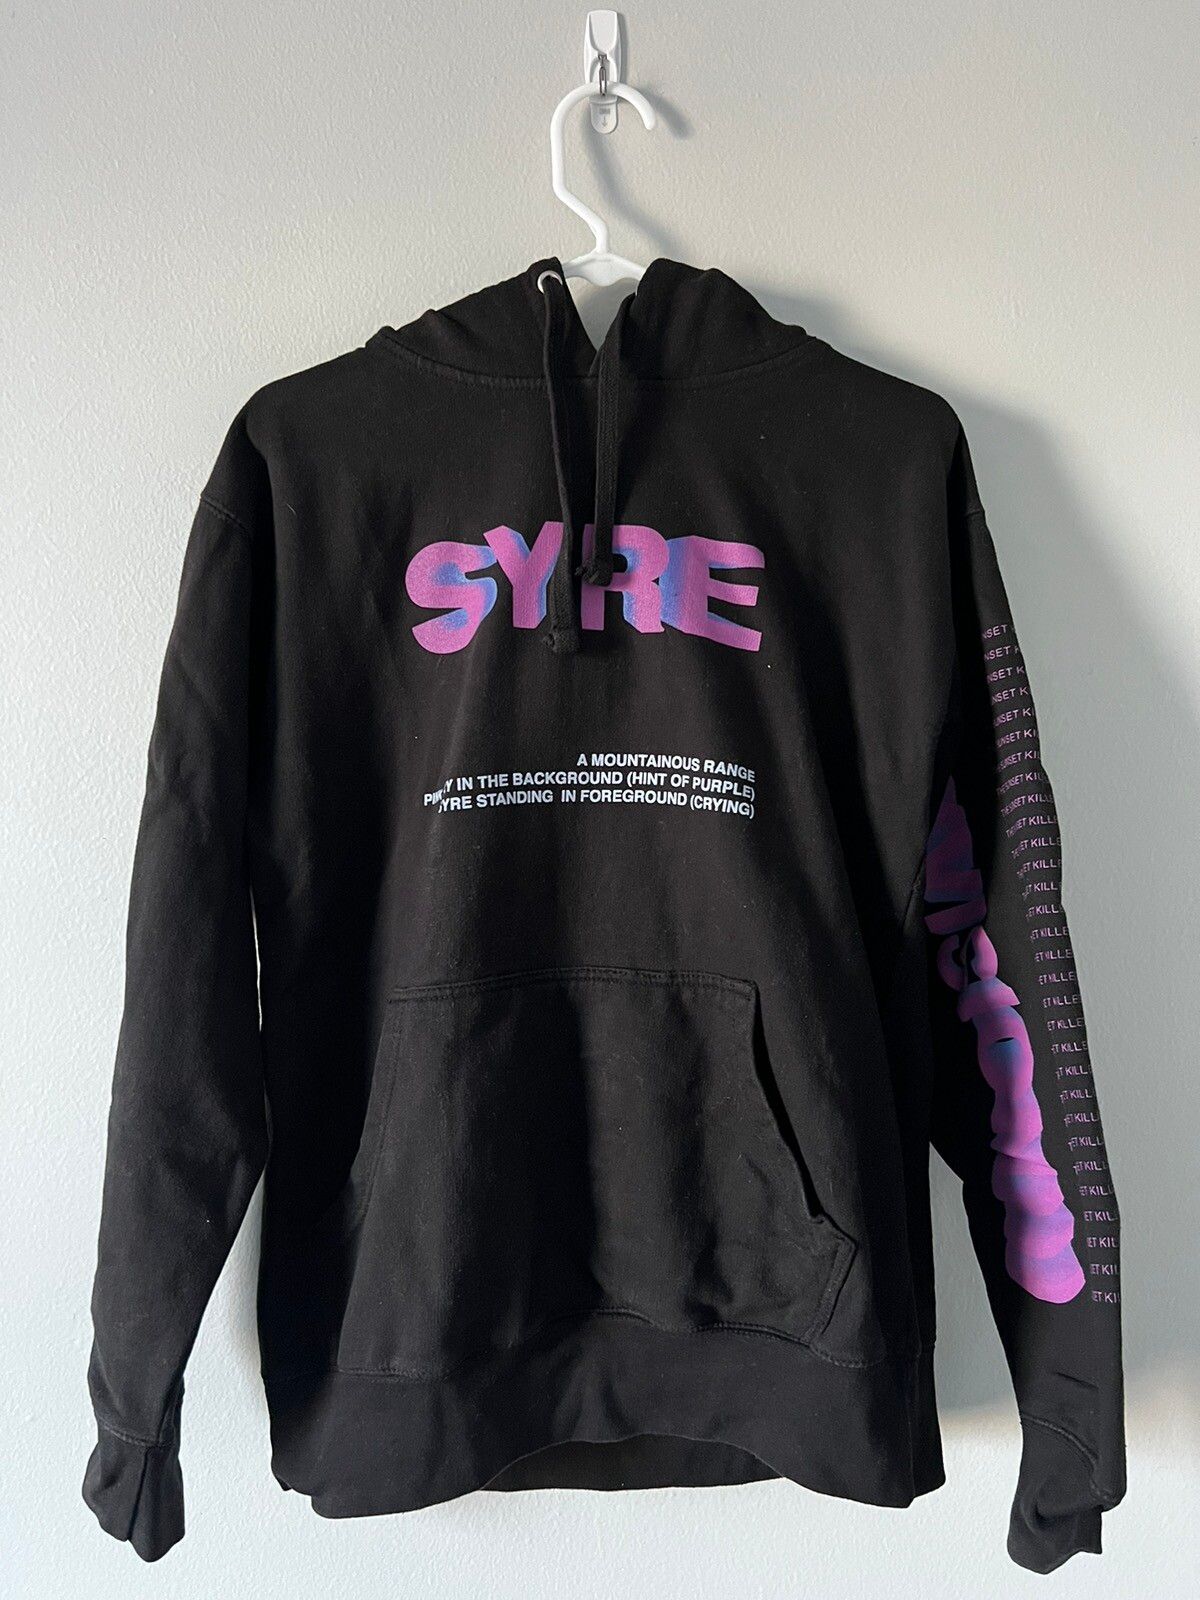 Msftsrep Jaden Smyth SYRE tour hoodie Size US M / EU 48-50 / 2 - 1 Preview